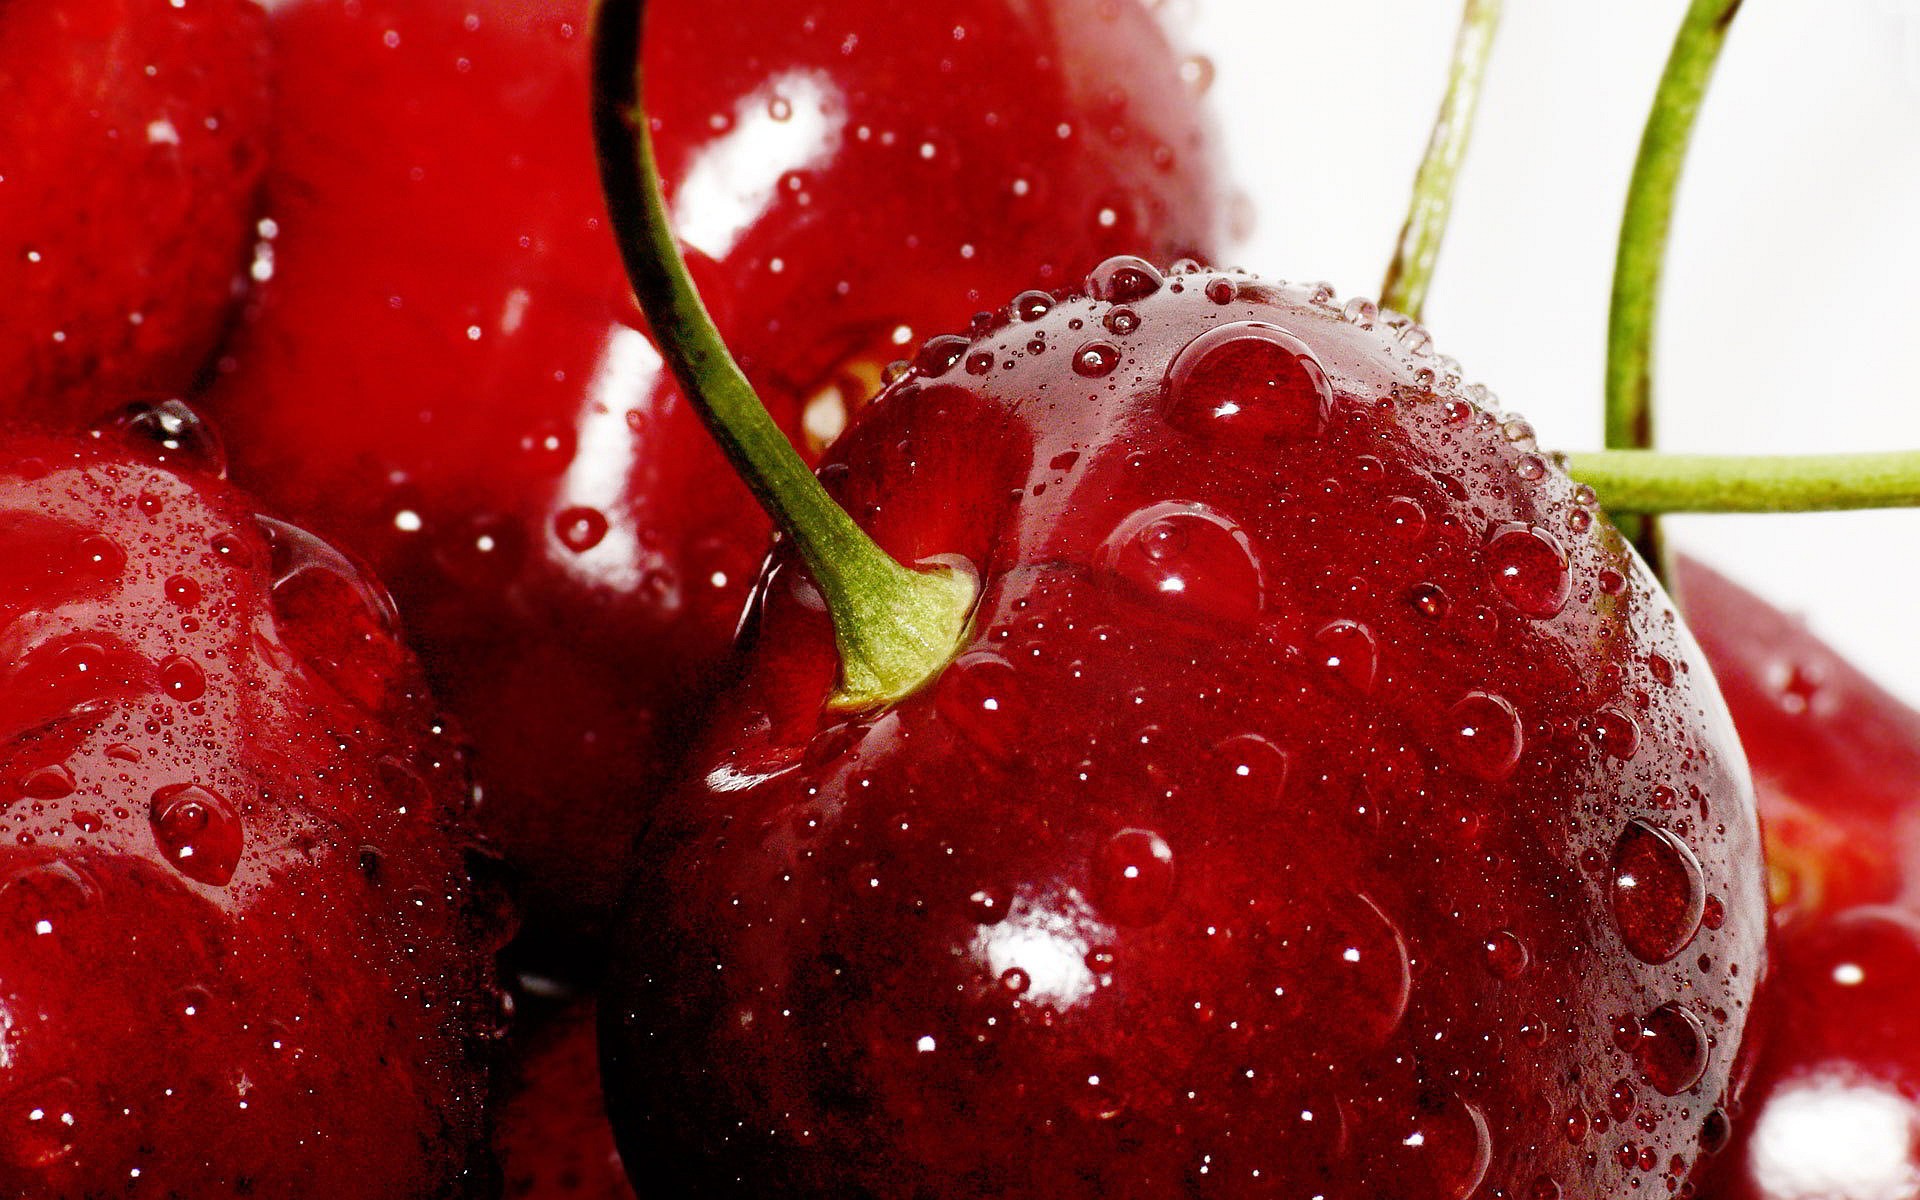 Macro delicious fresh cherry vitamins all day Straipsniai.lt